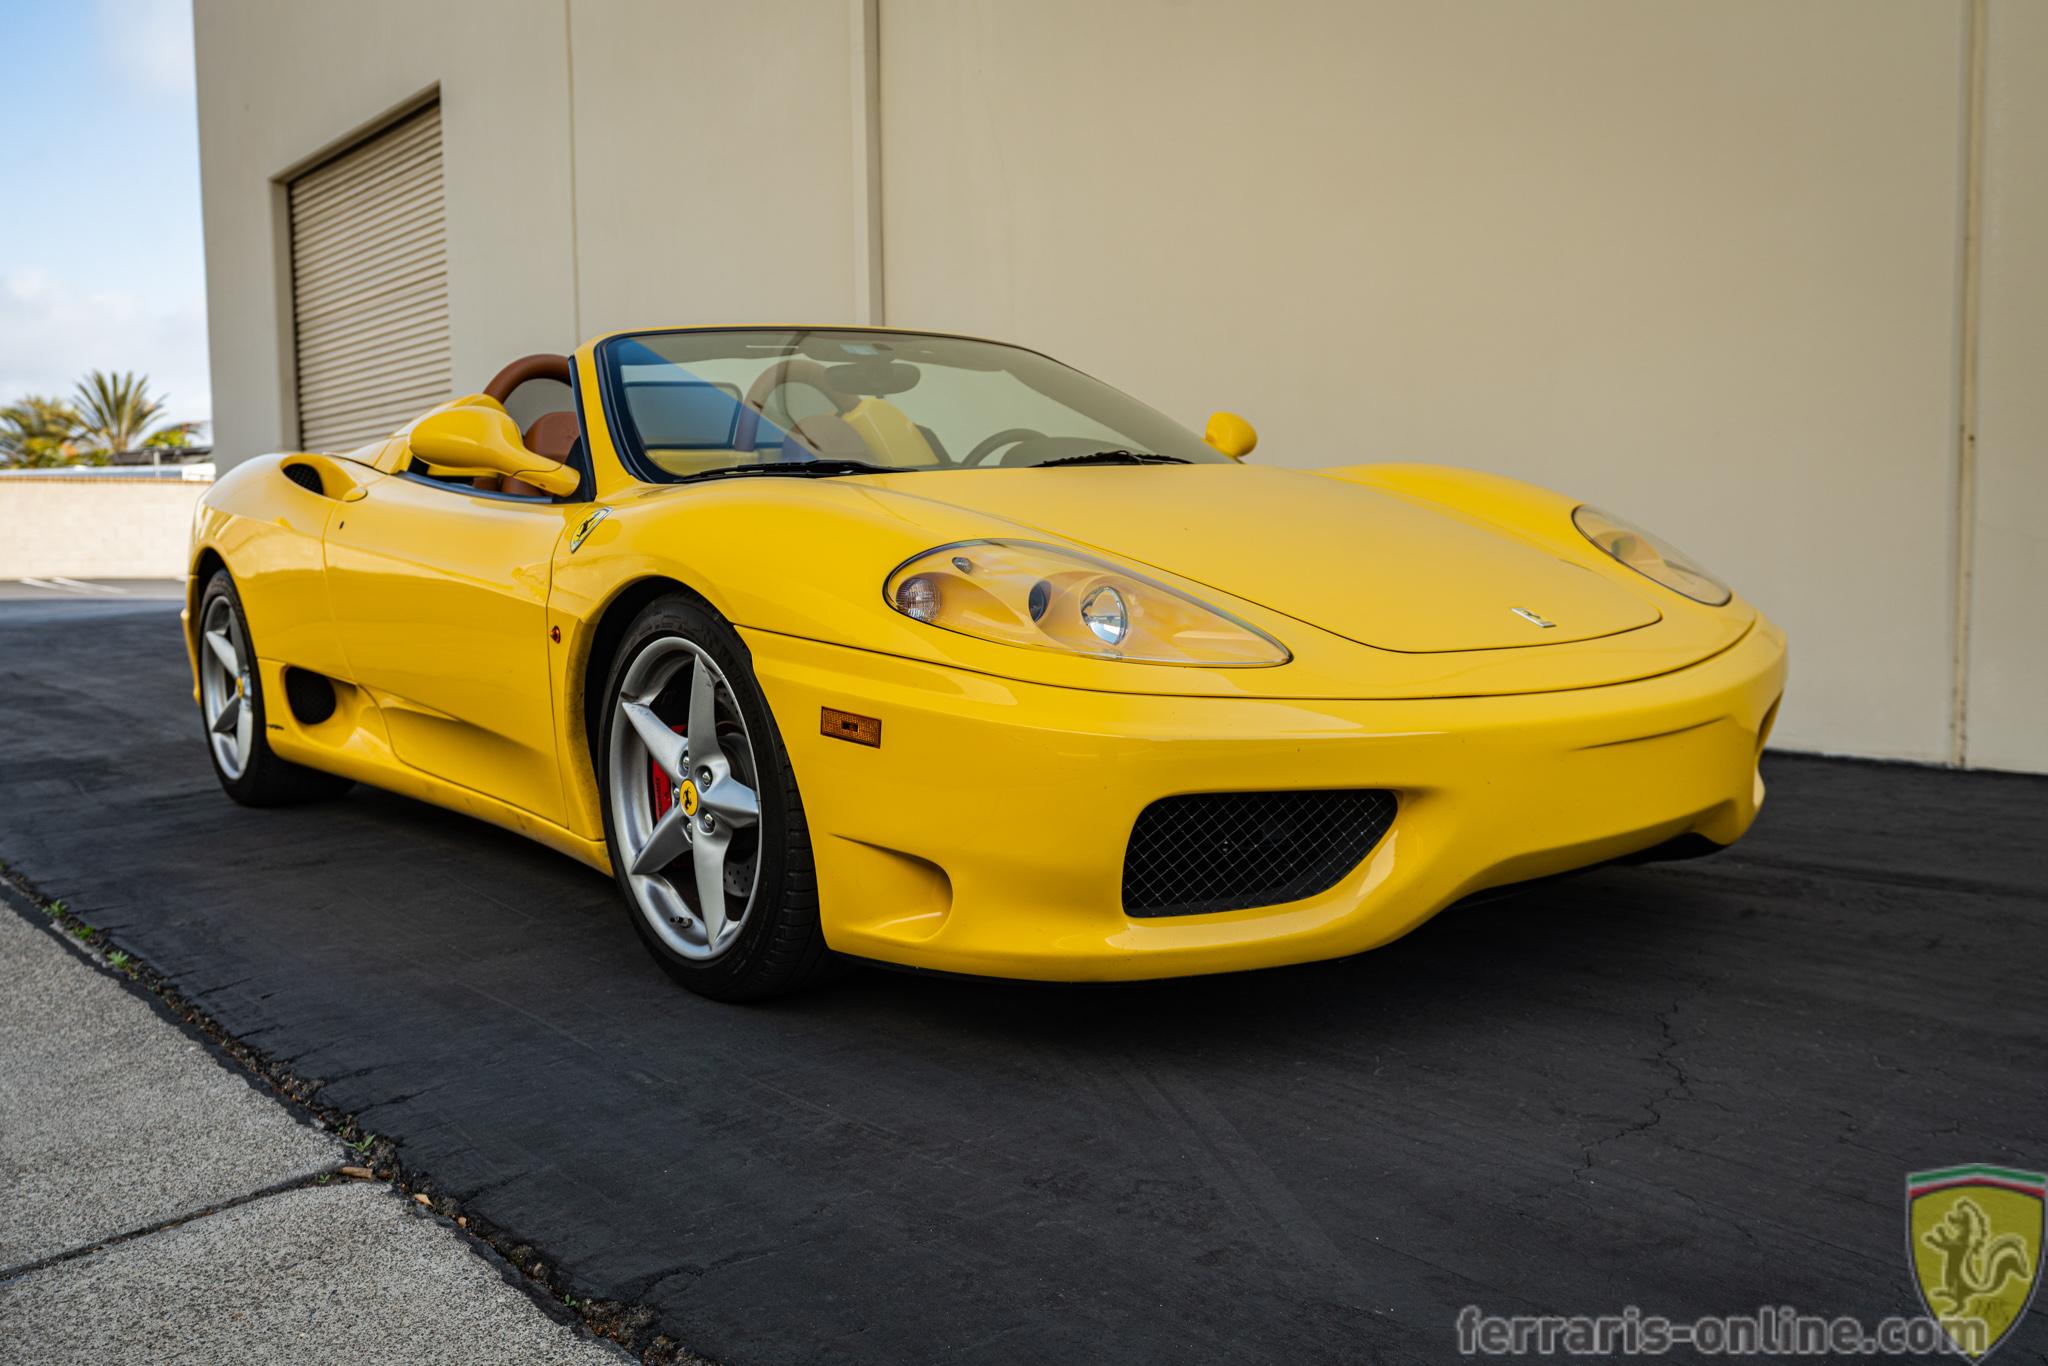 2002 Ferrari 360 spider 6-speed #128751 For Sale - Ferraris Online